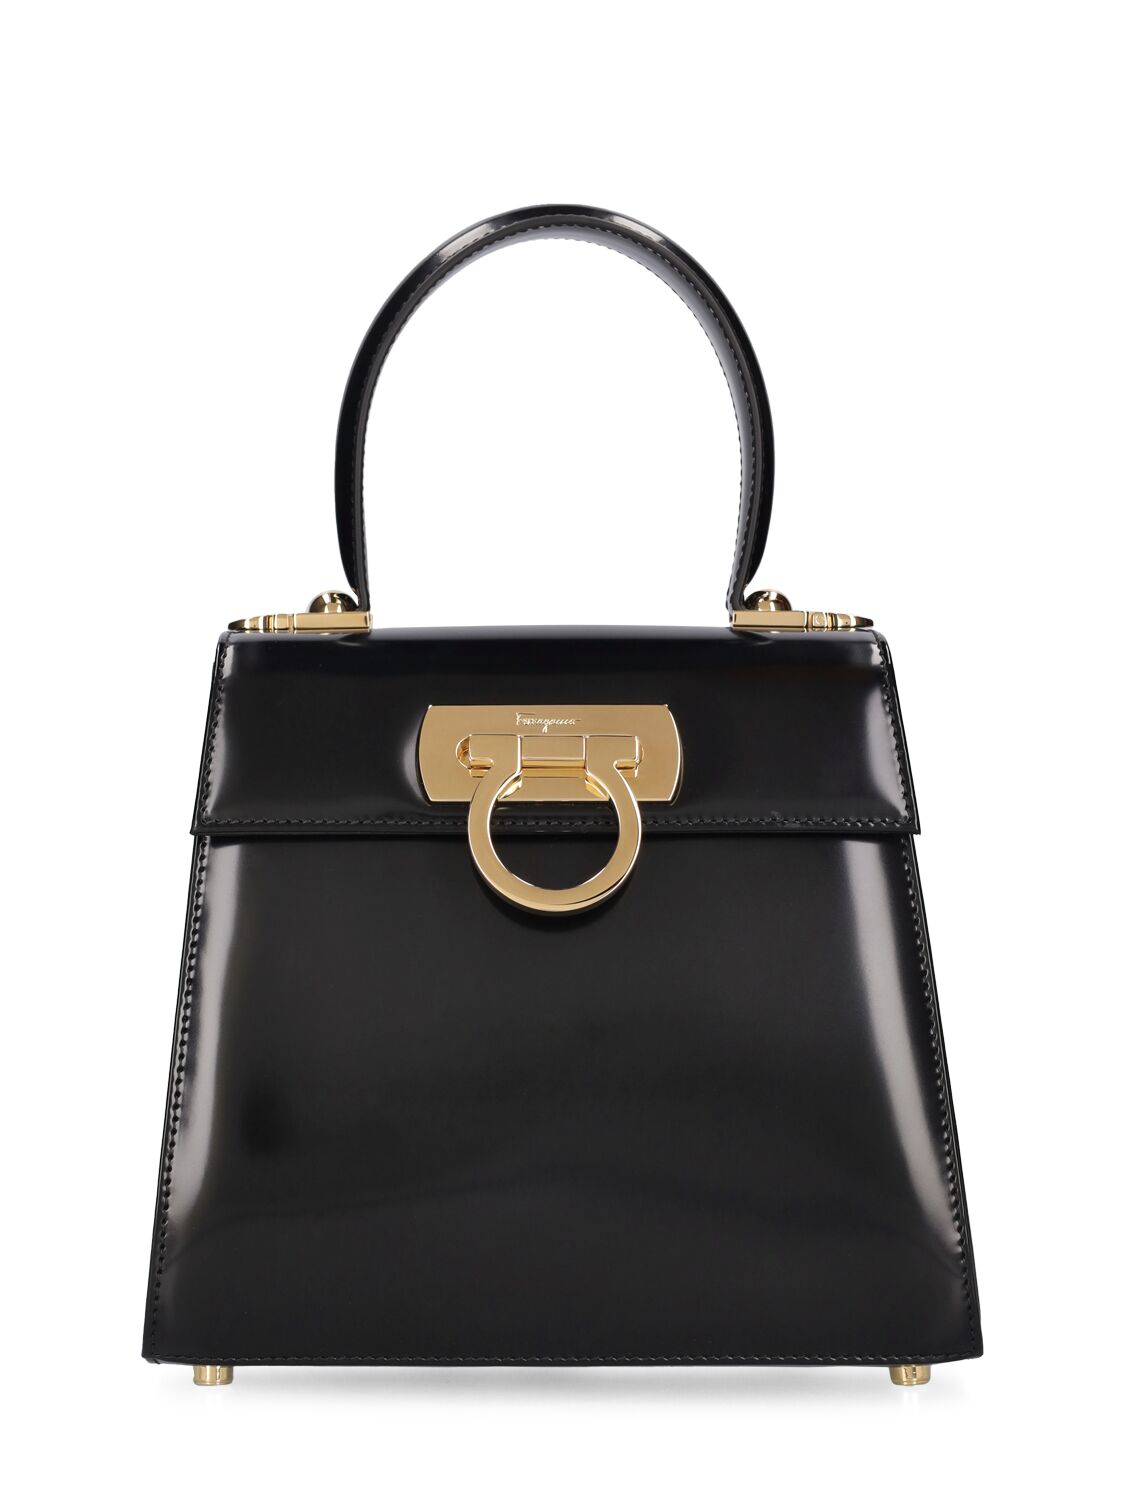 Ferragamo Iconic Leather Top Handle Bag In Black